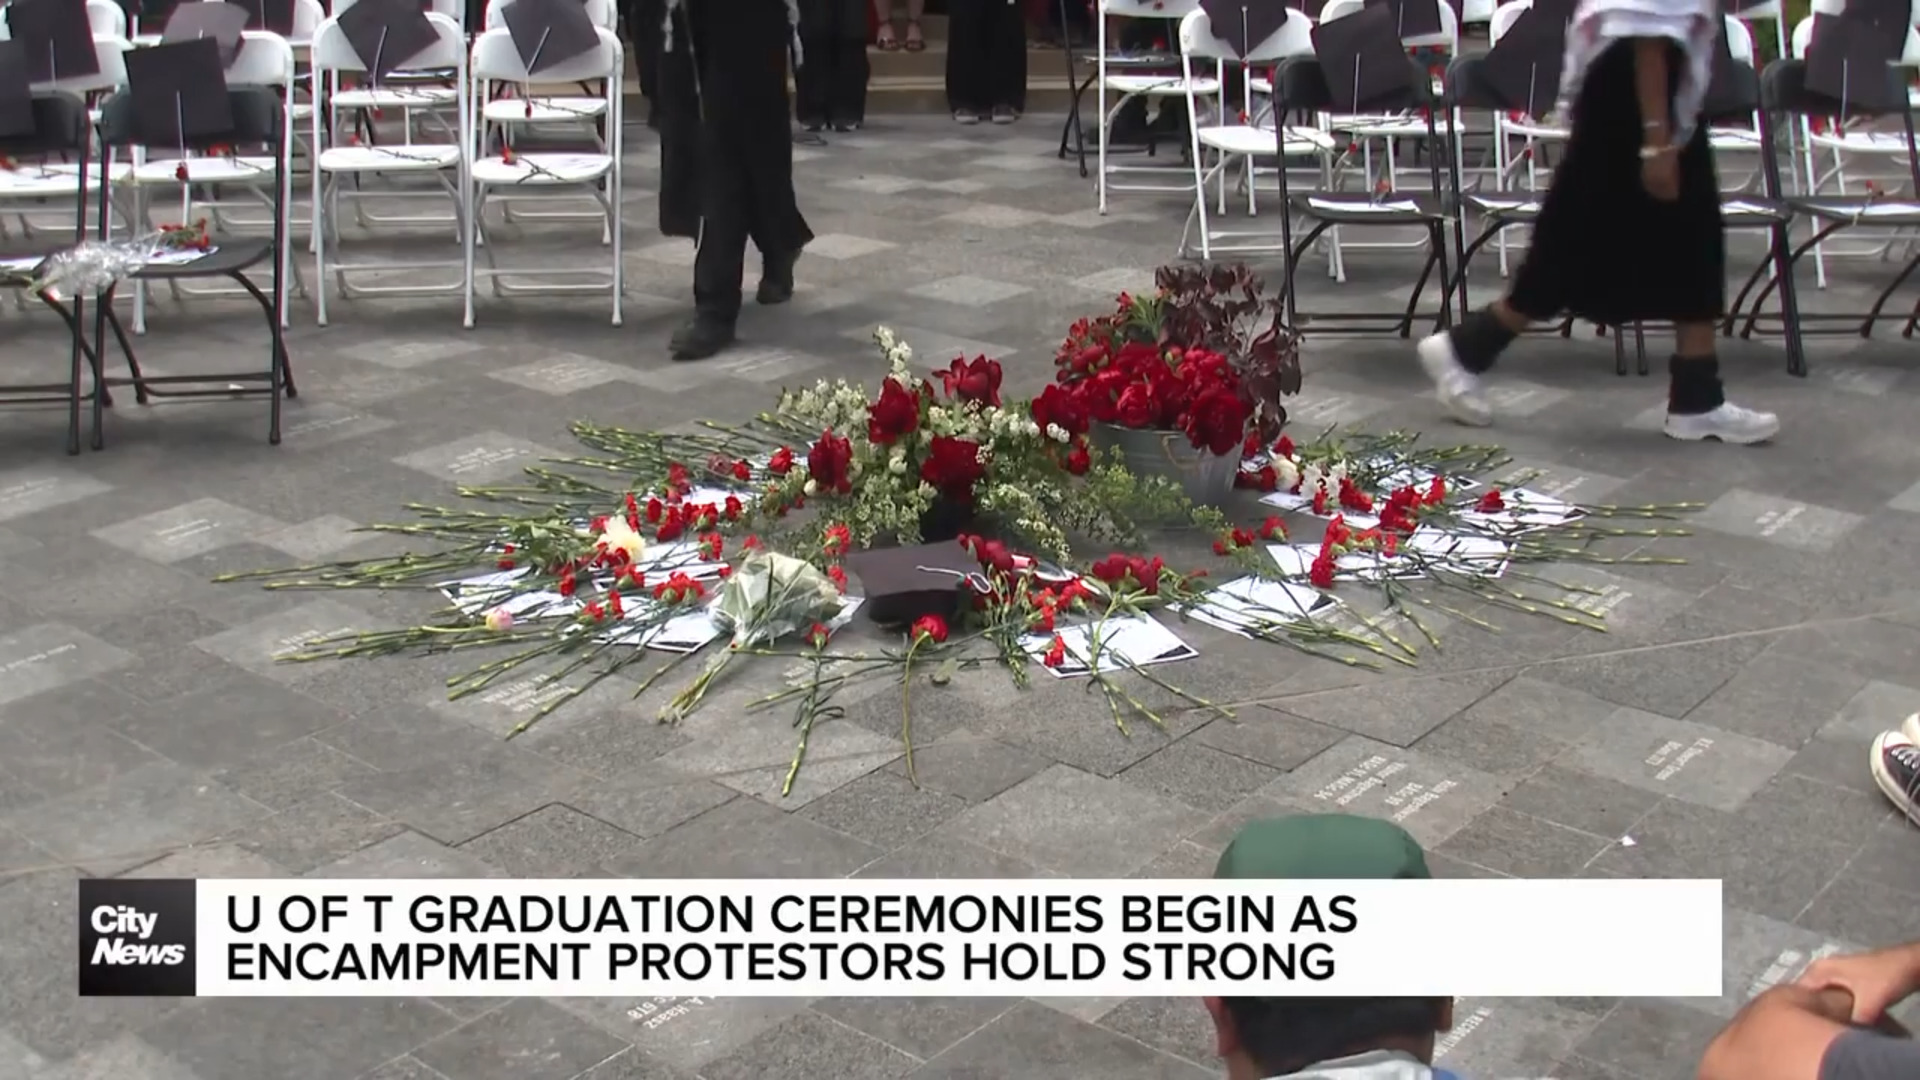 U of T graduation ceremonies begin as encampment protestors hold strong